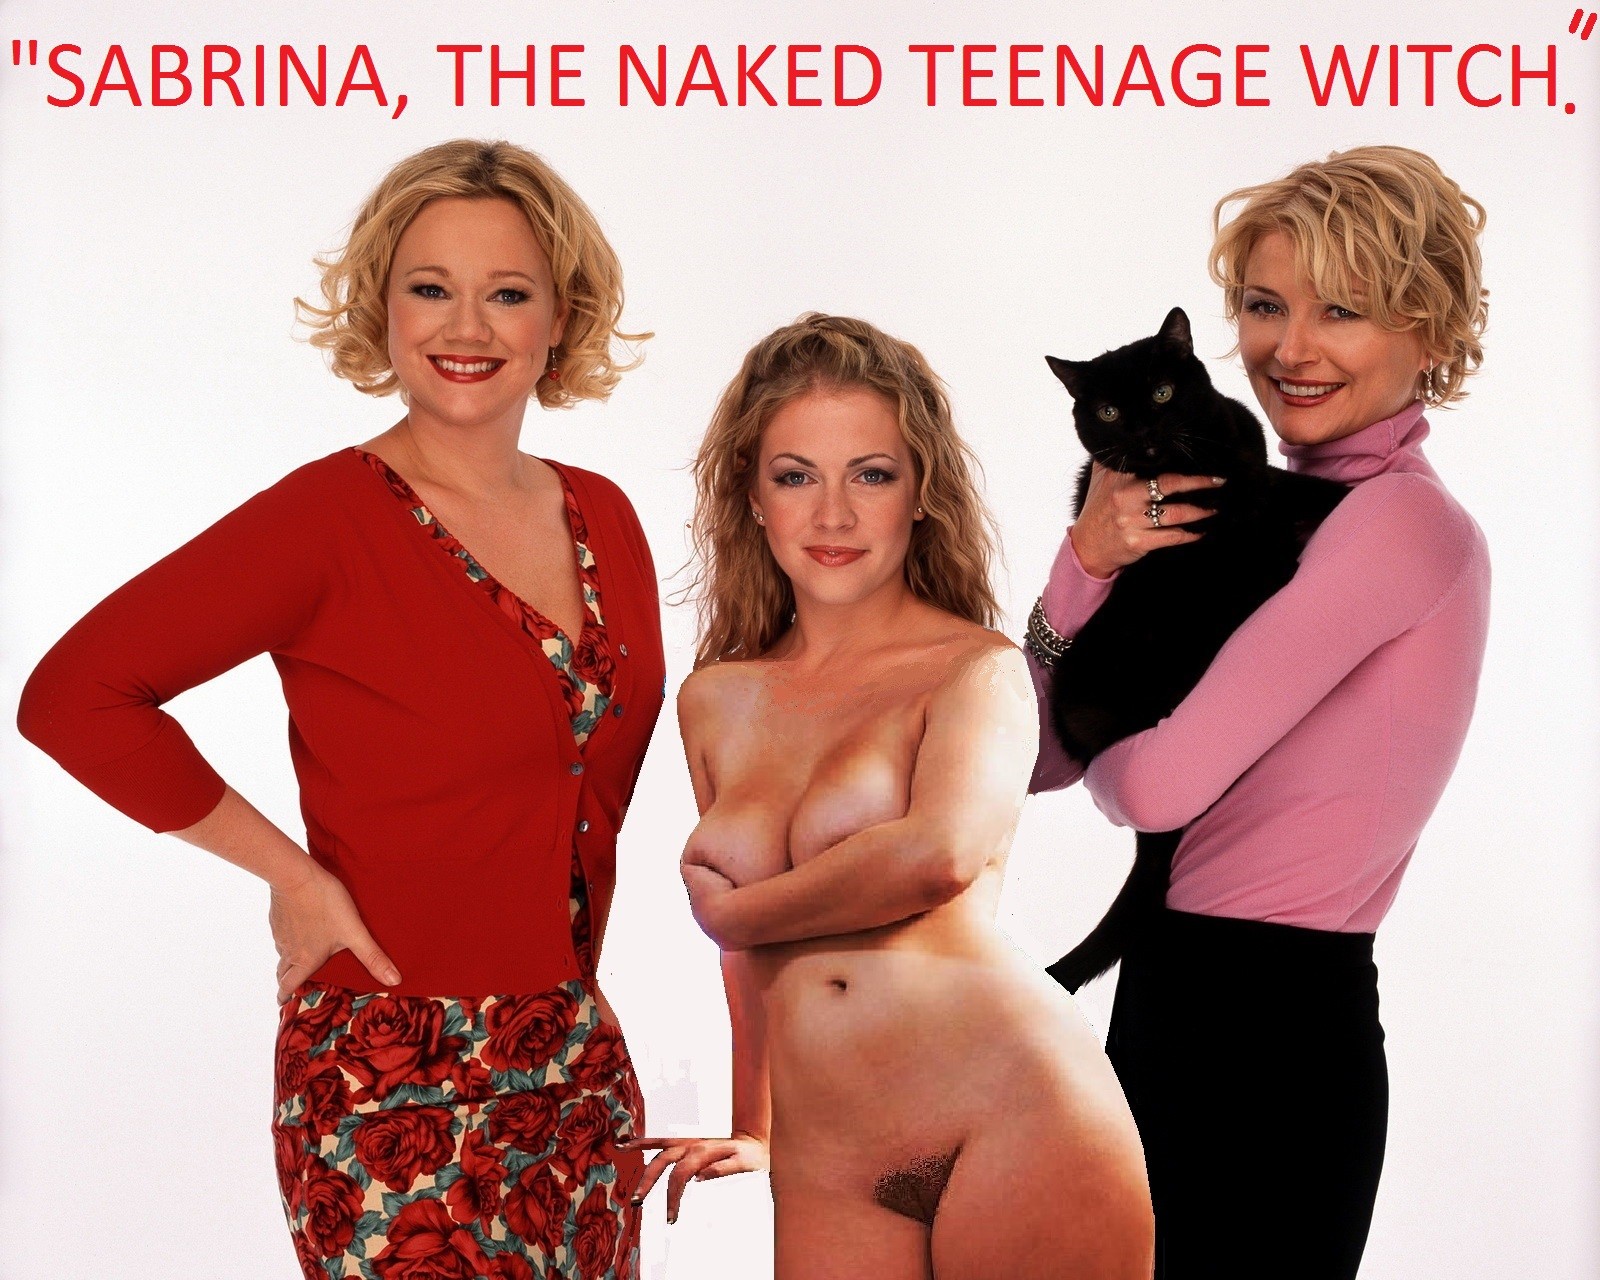 Sabrina the teenage witch naked